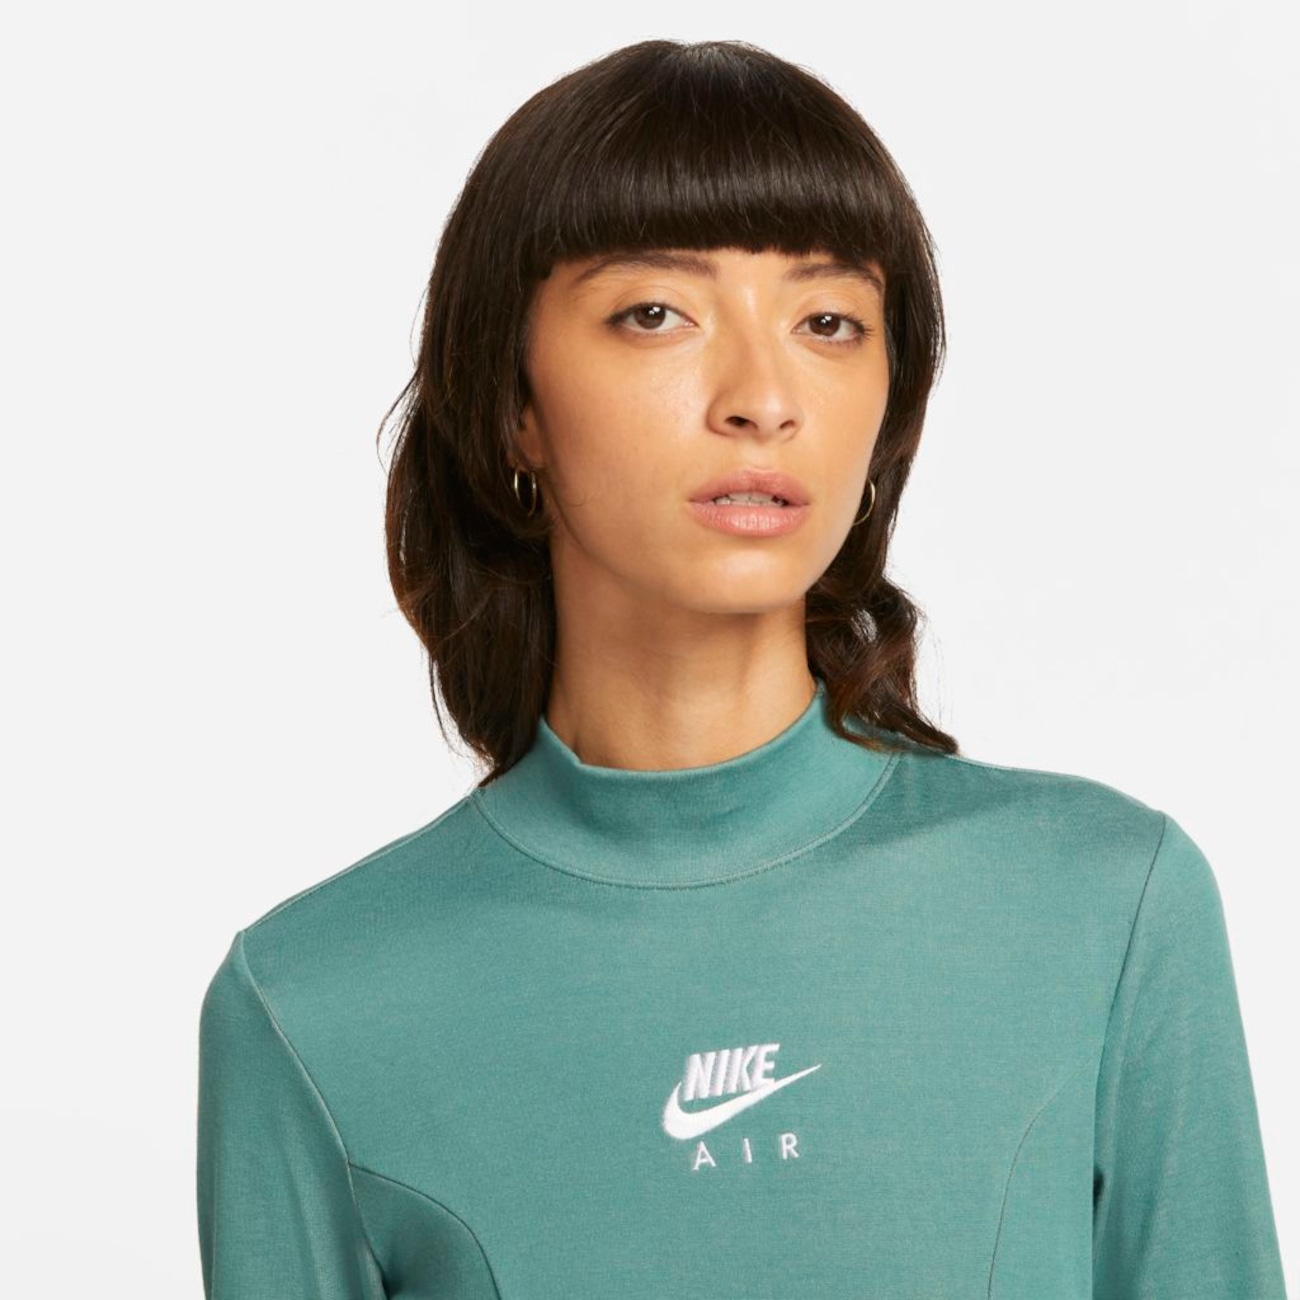 Vestido Nike Air Feminino - Foto 3